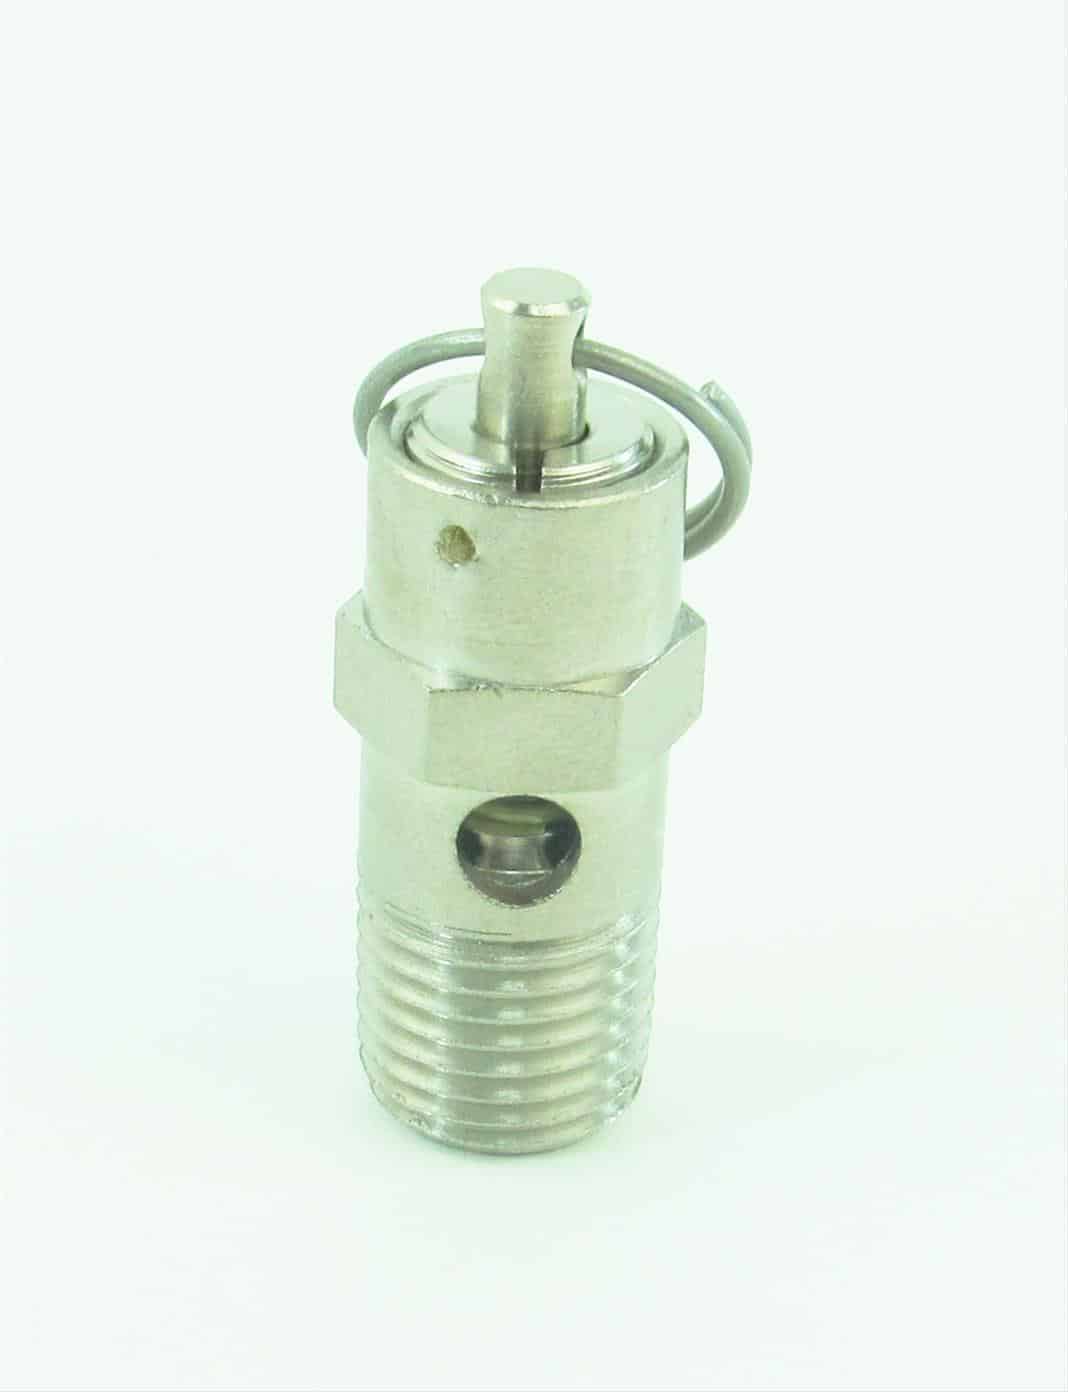 DeVilbiss Pressure Pot Parts For KBII DEVTIA-4355